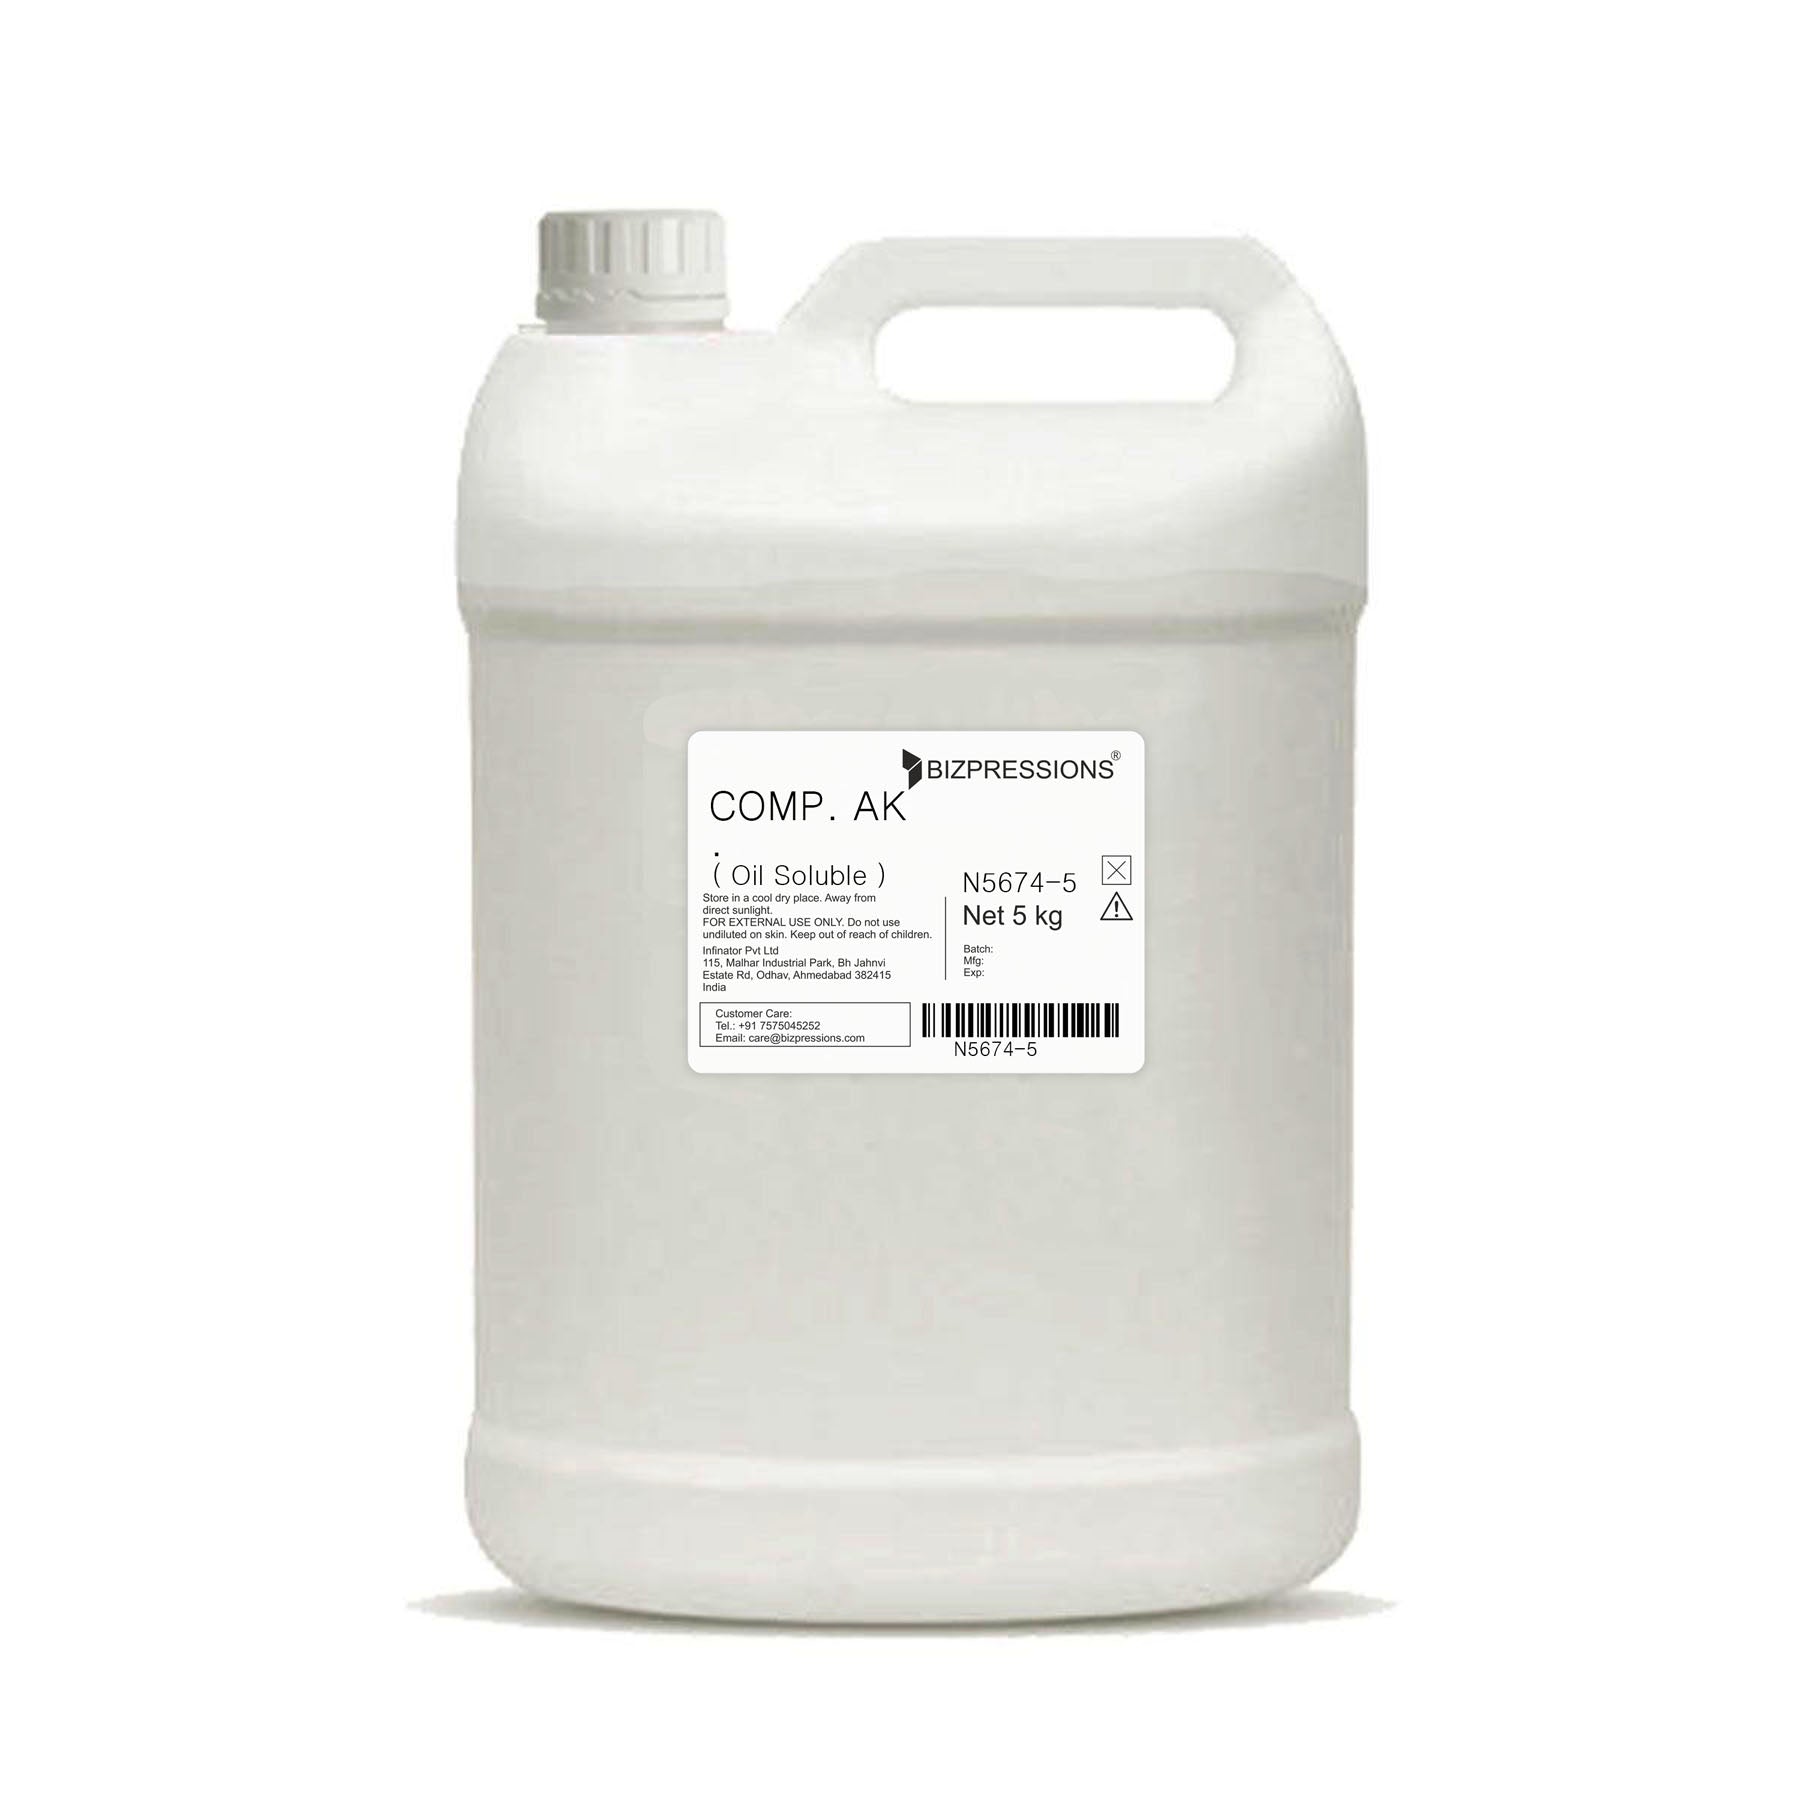 COMP. AK - Fragrance ( Oil Soluble ) - 5 kg